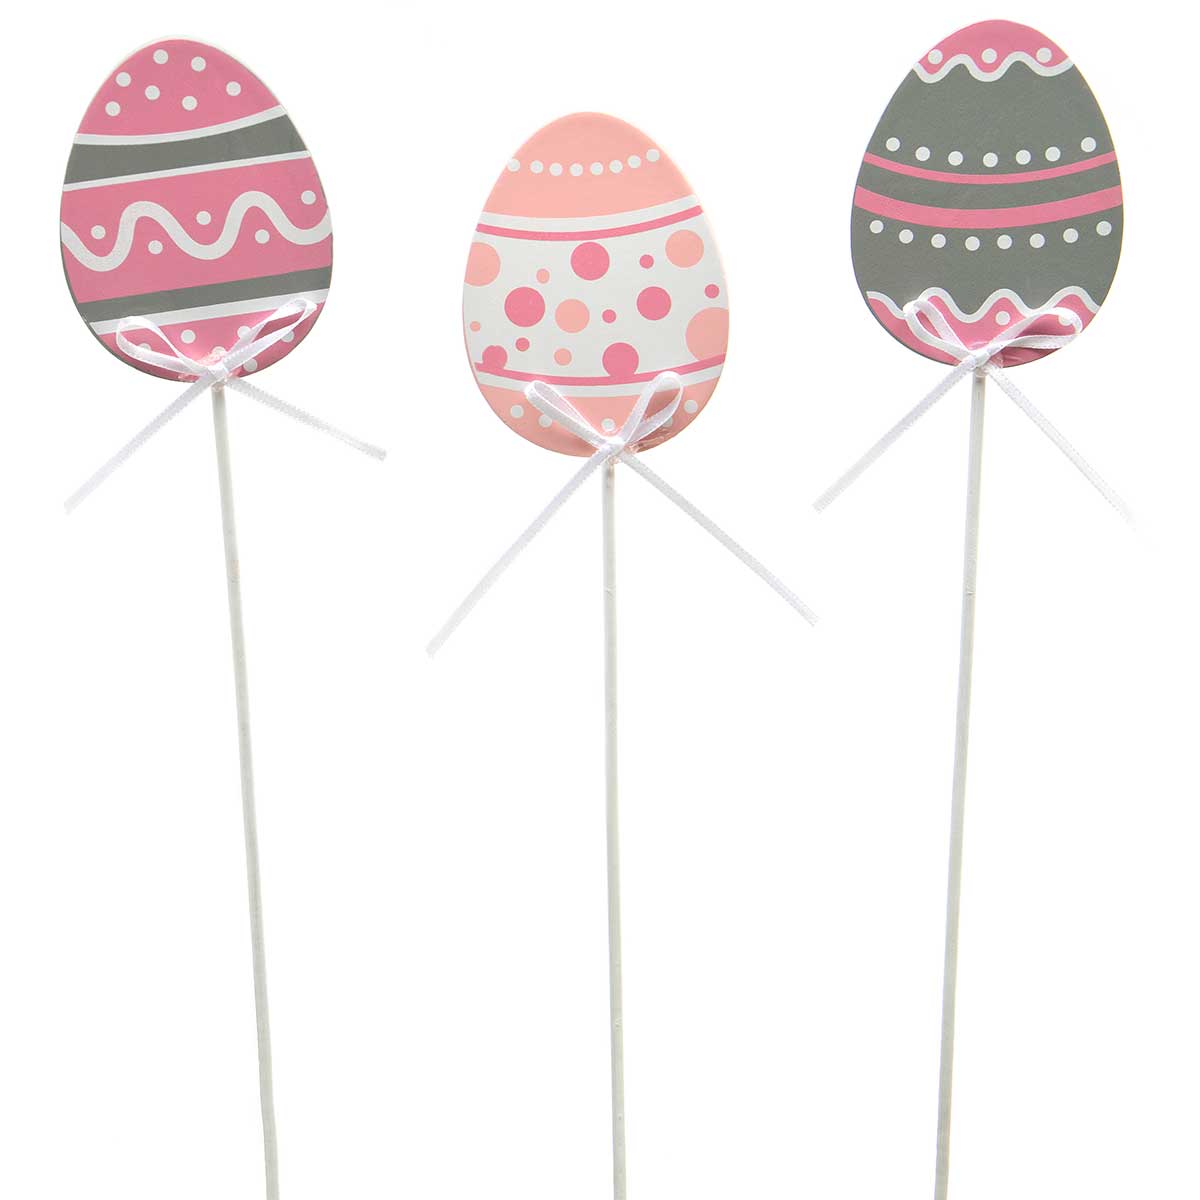 !Easter Egg on a Stick Grey Dots/Grey Stripes/Pink